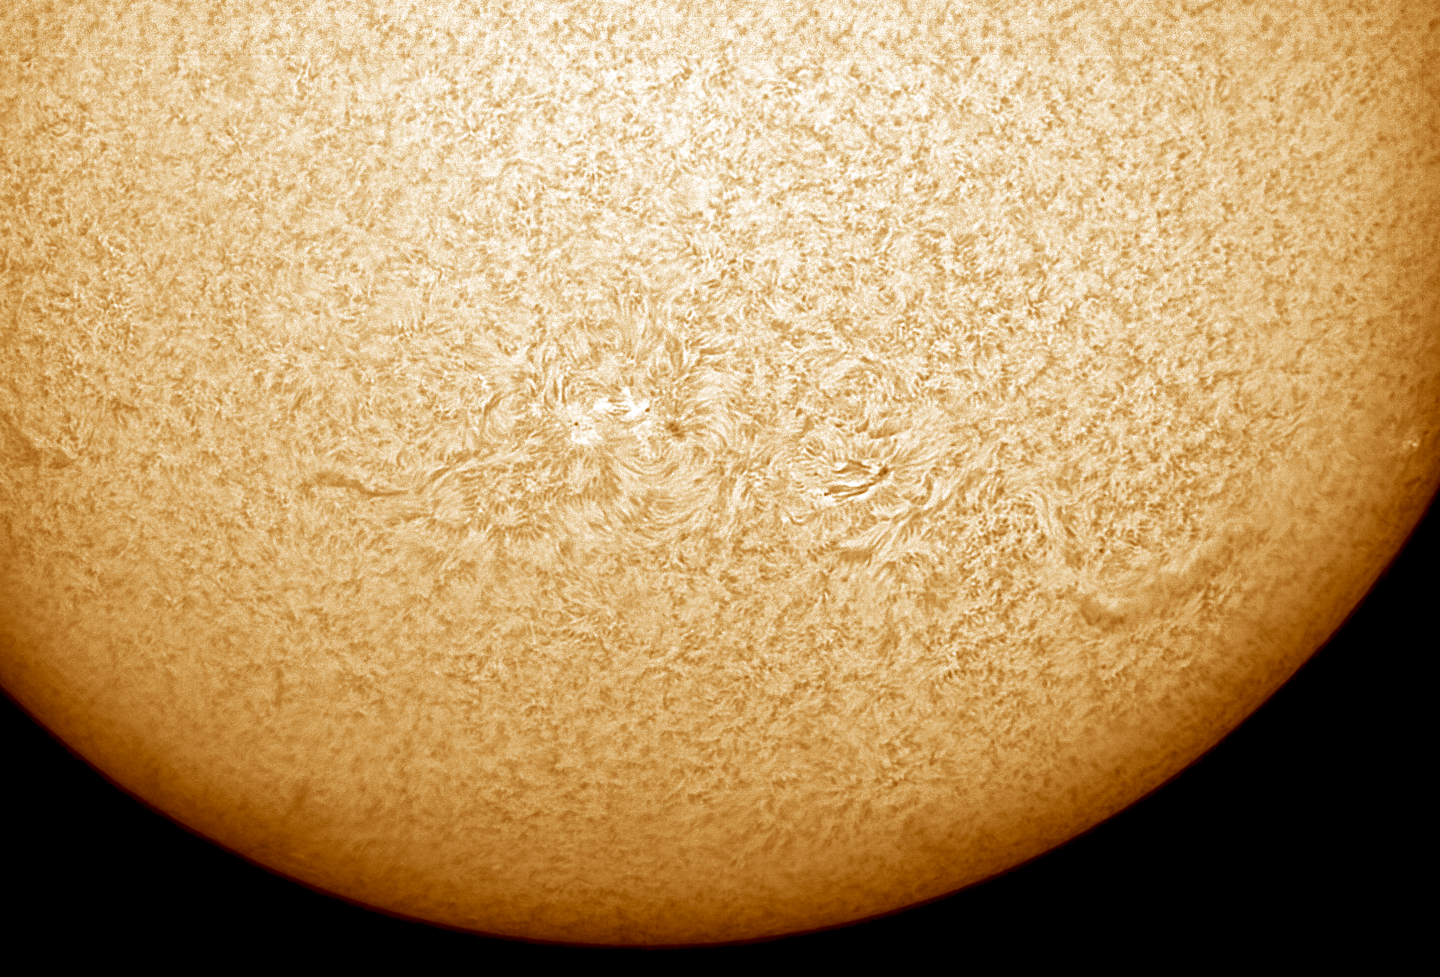 Sun_080326_sol_2021-11-27s.png